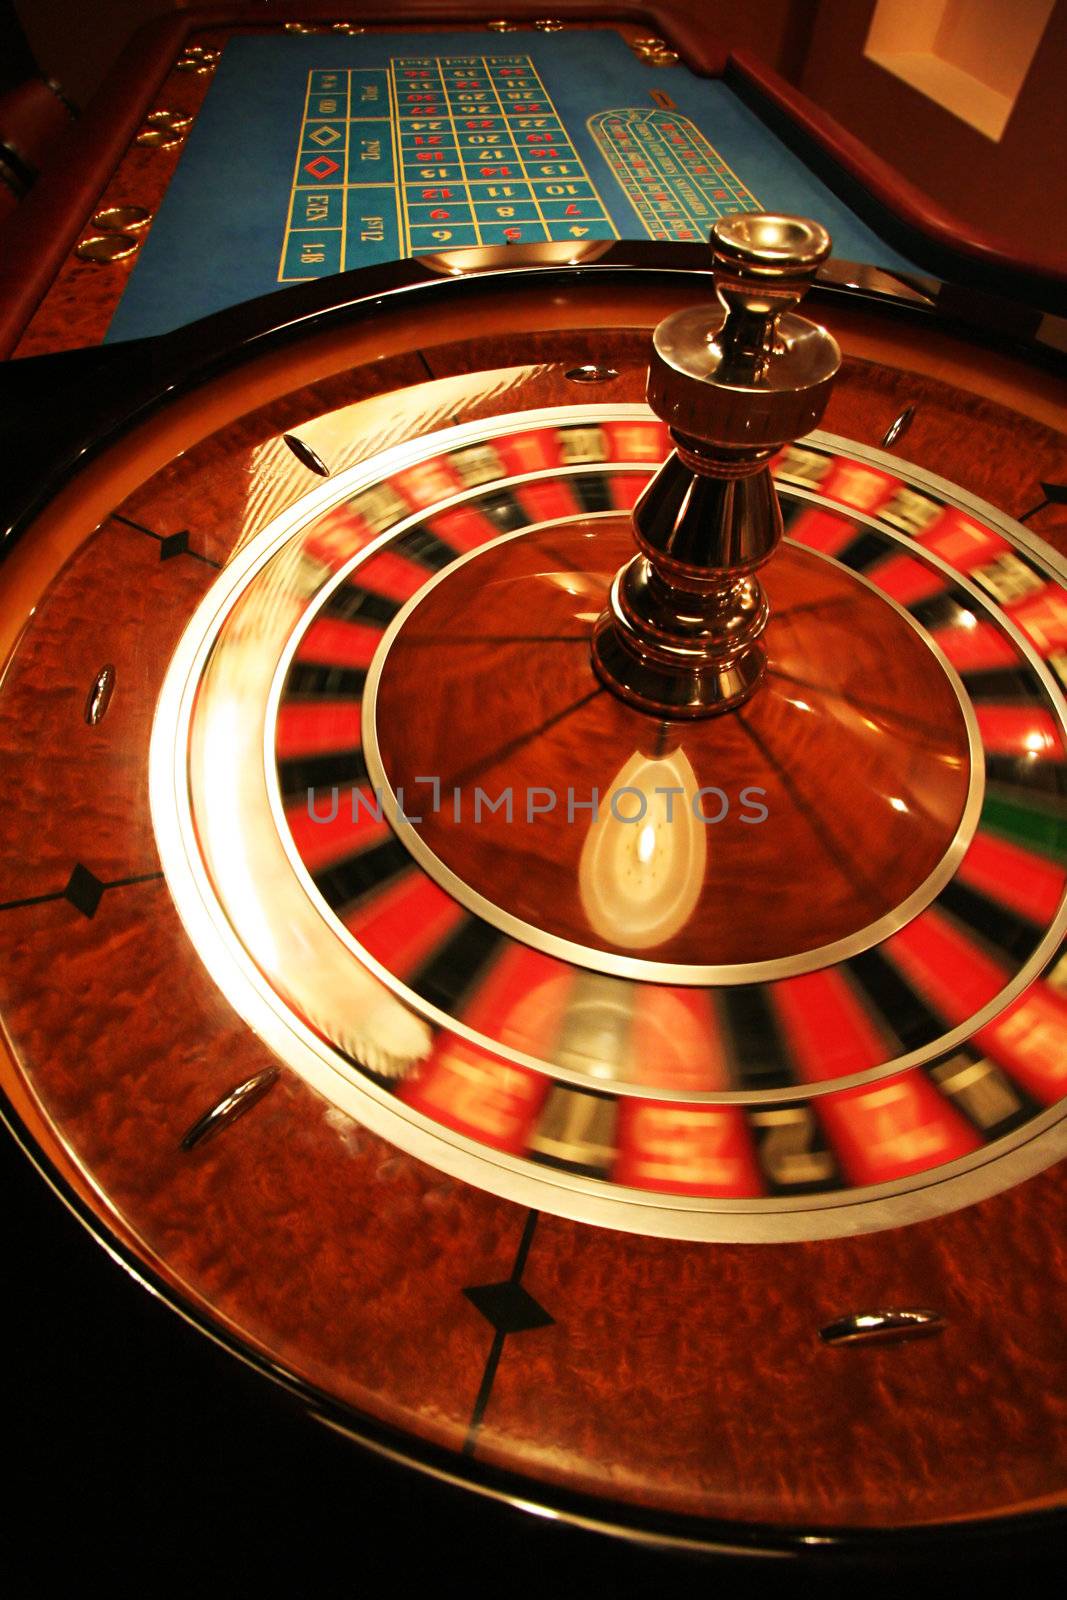 A revolve roulette in a new casino